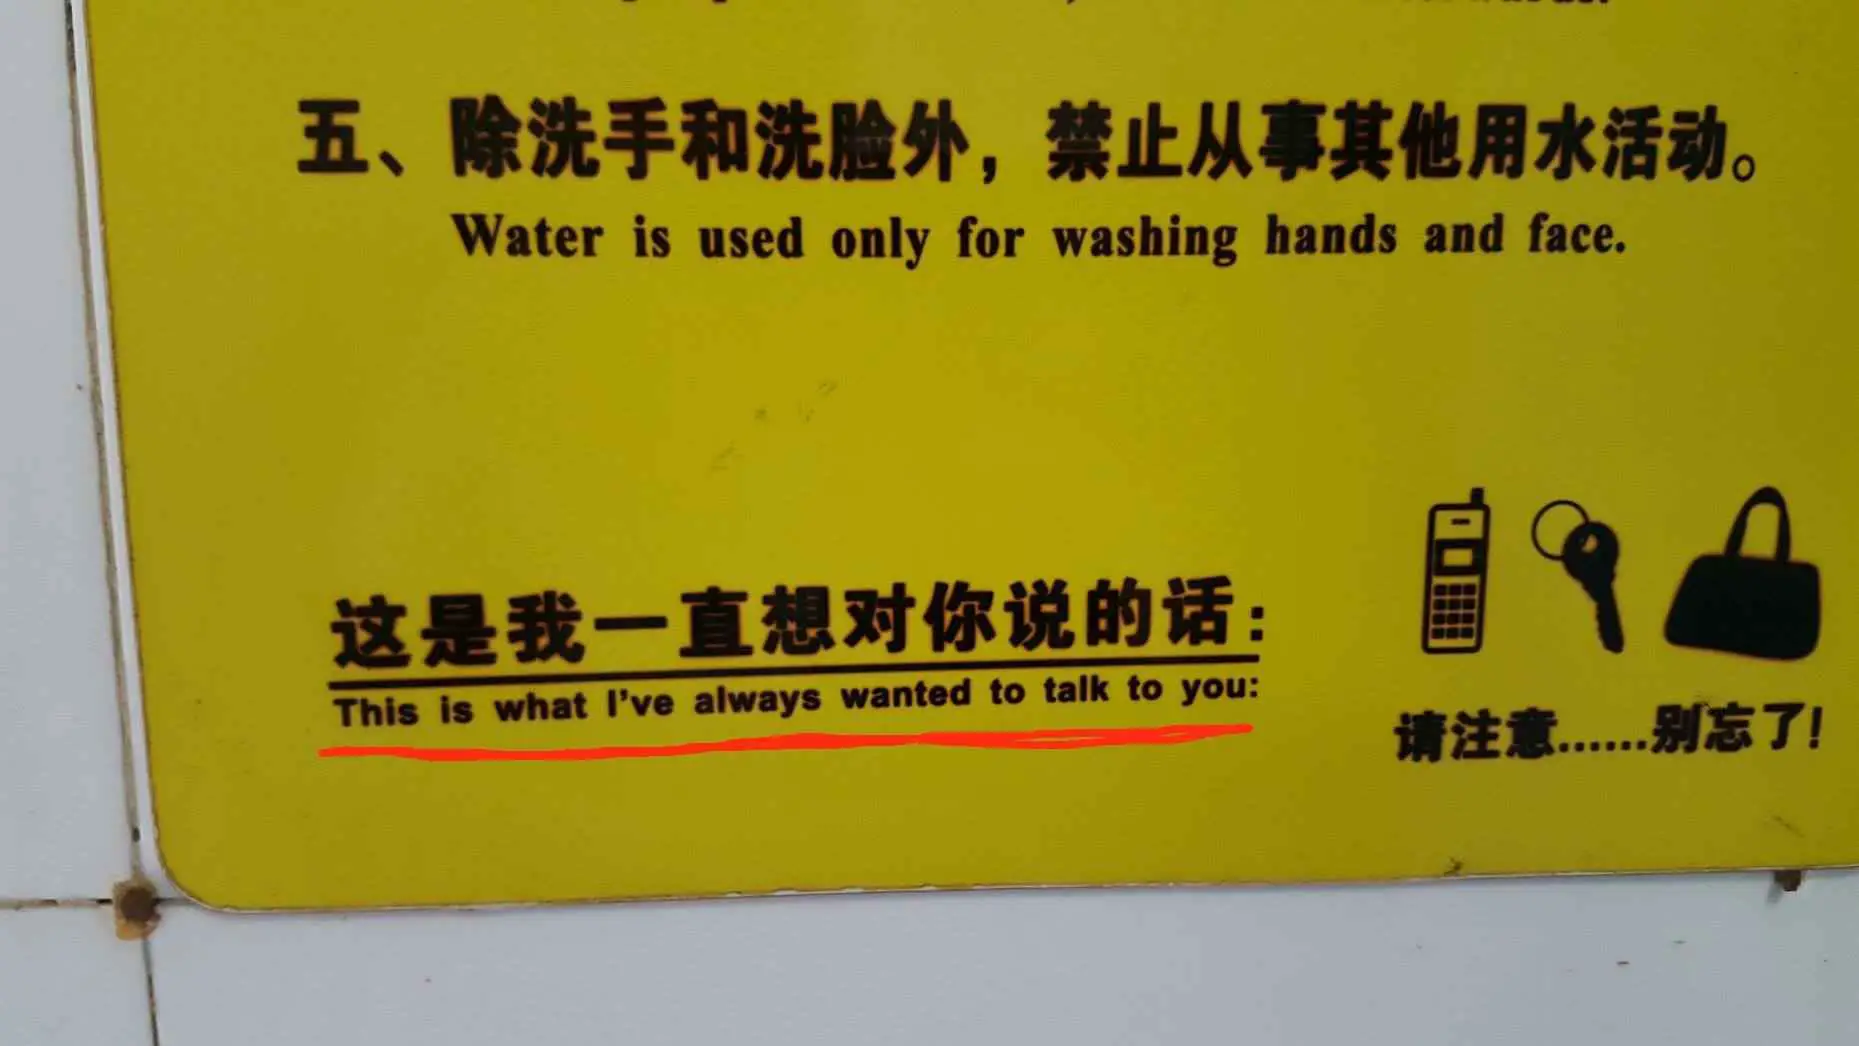 Weird Toilet Sign | China Travel Blog | Translation Fails From China - Chingrish Time! | Chinglish, Chingrish, Translation Fails | Author: Anthony Bianco - The Travel Tart Blog